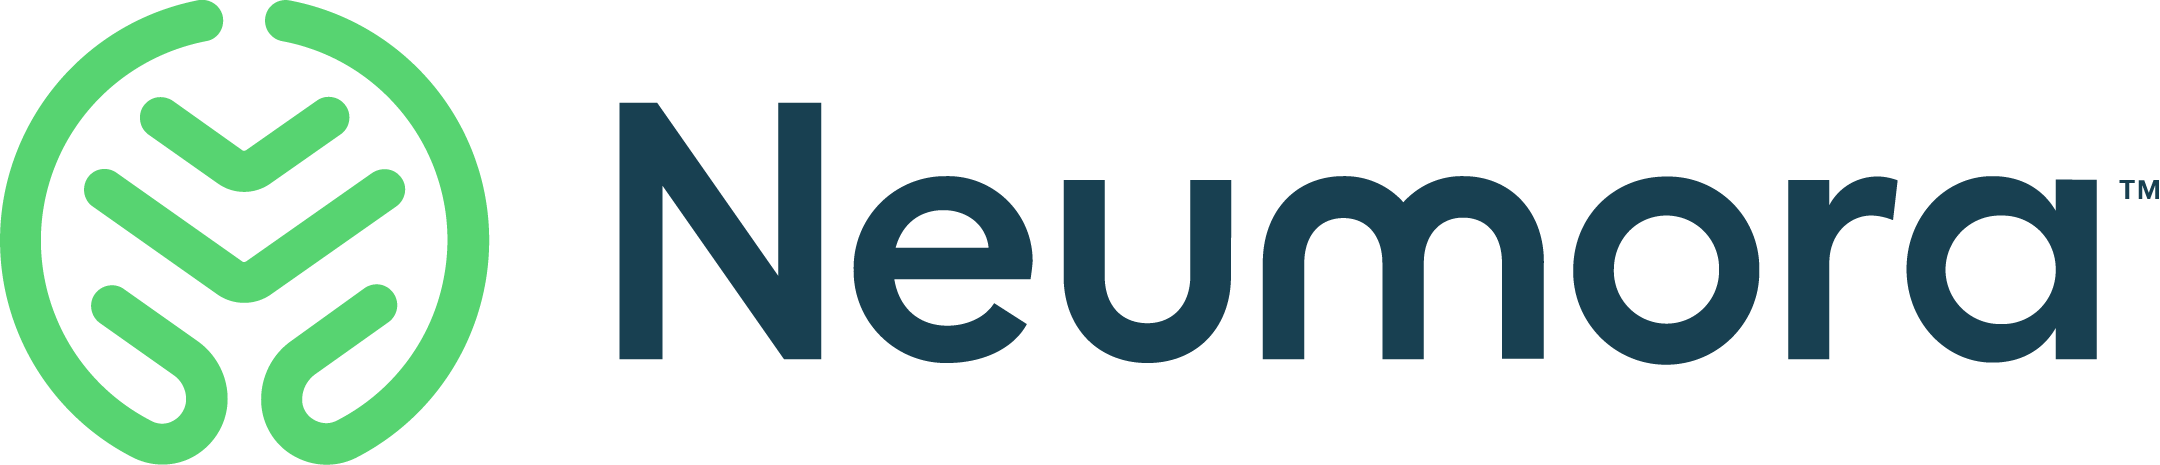 Vision Fund investment portfolio company Neumora's logo